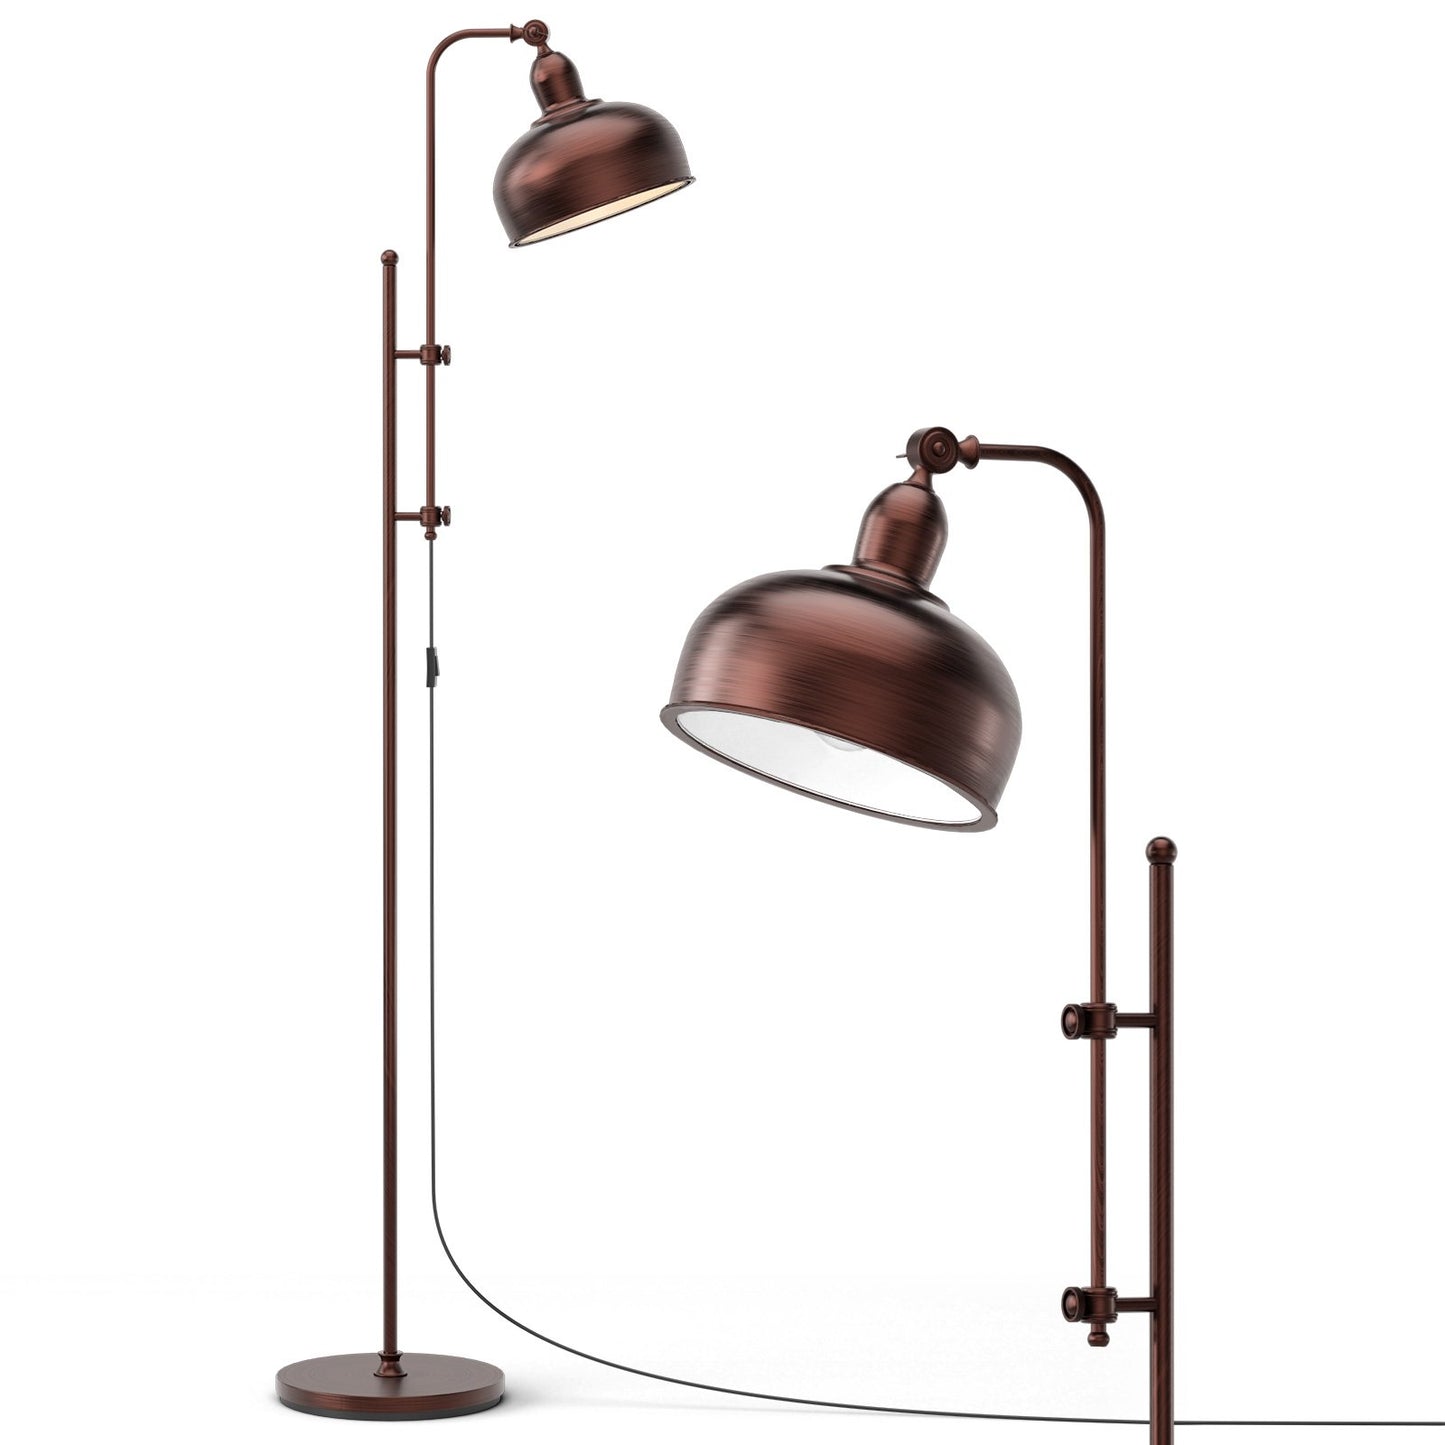 Industrial Floor Standing Pole Lamp with Adjustable Lamp Head, Black - Gallery Canada